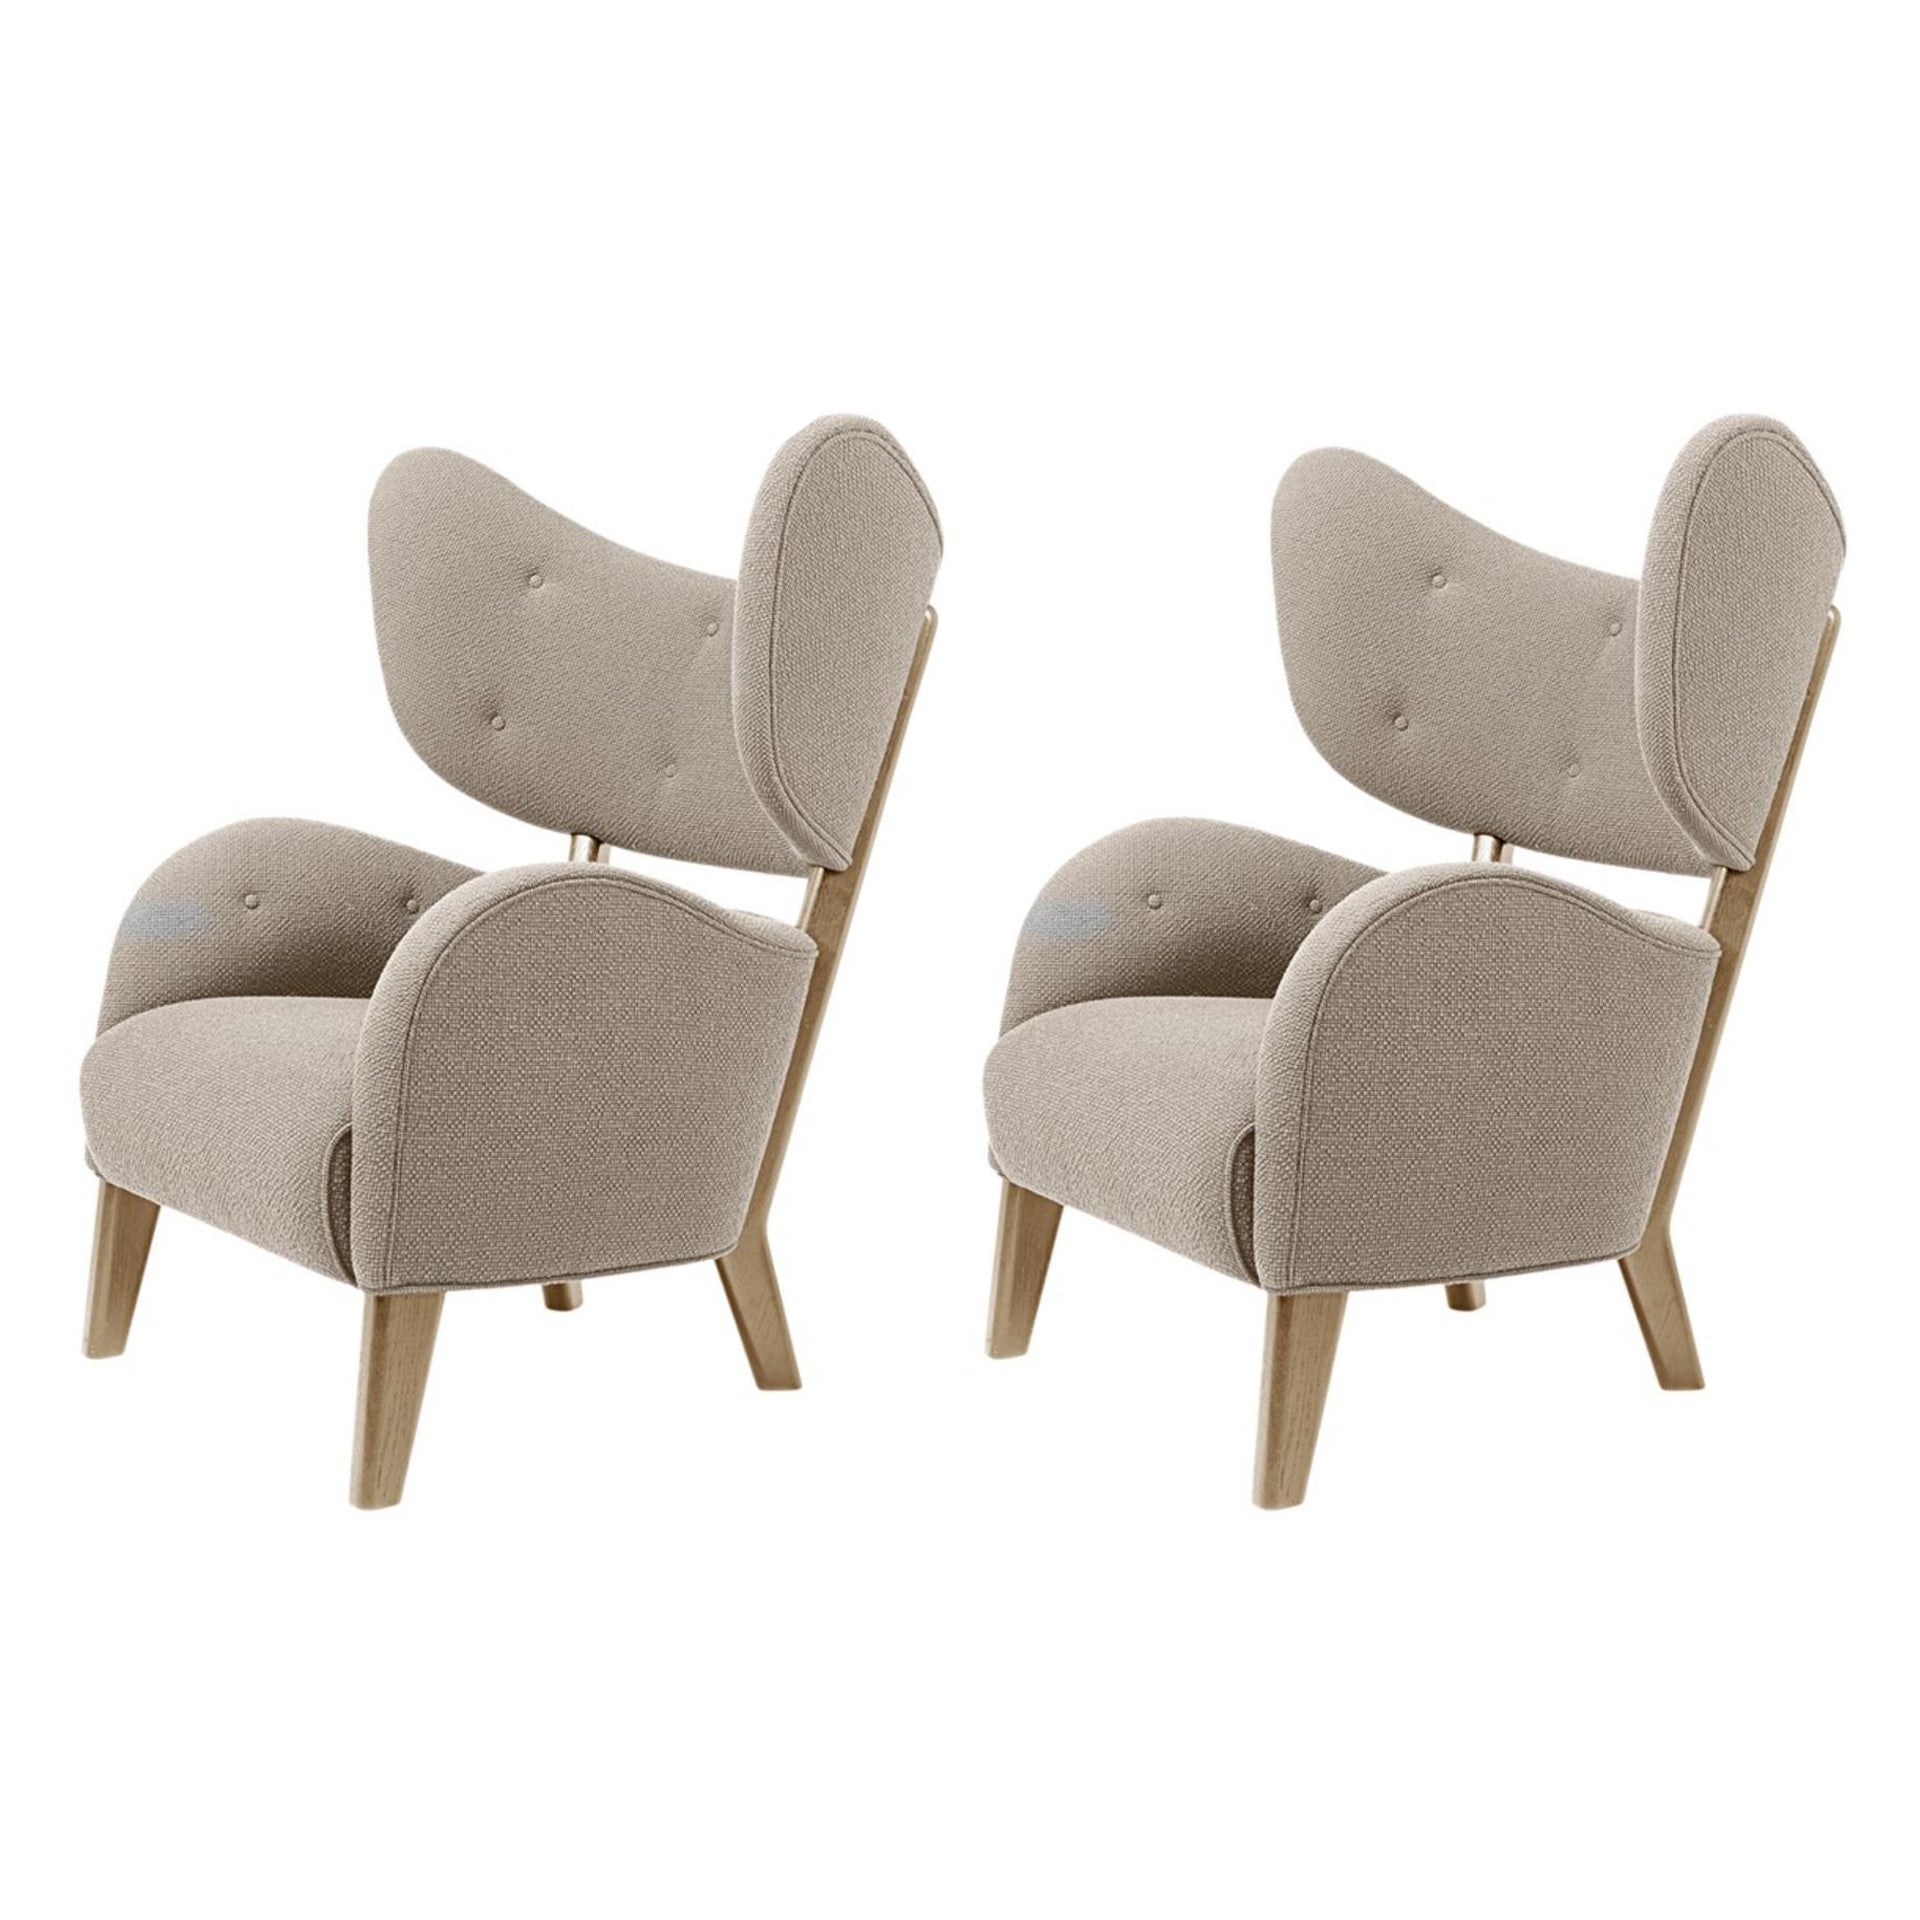 Set of 2 Dark Beige Sahco Zero Natural Oak My Own Chair Lounge Chairs by Lassen